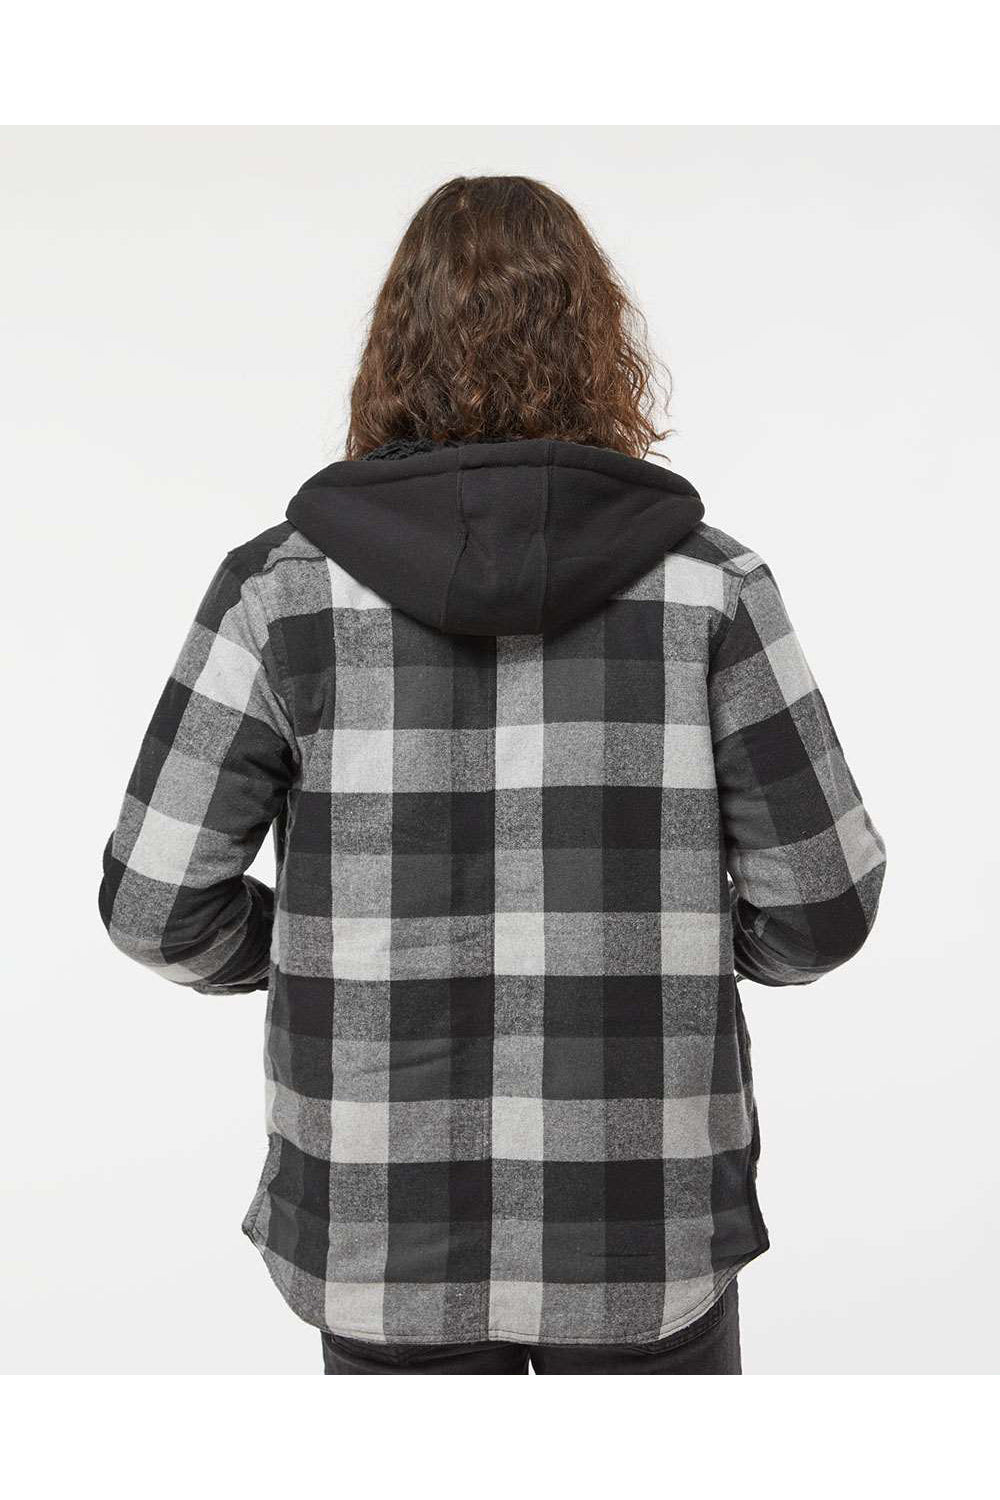 Burnside 8620 Mens Quilted Flannel Full Zip Hooded Jacket Black/Grey Model Back